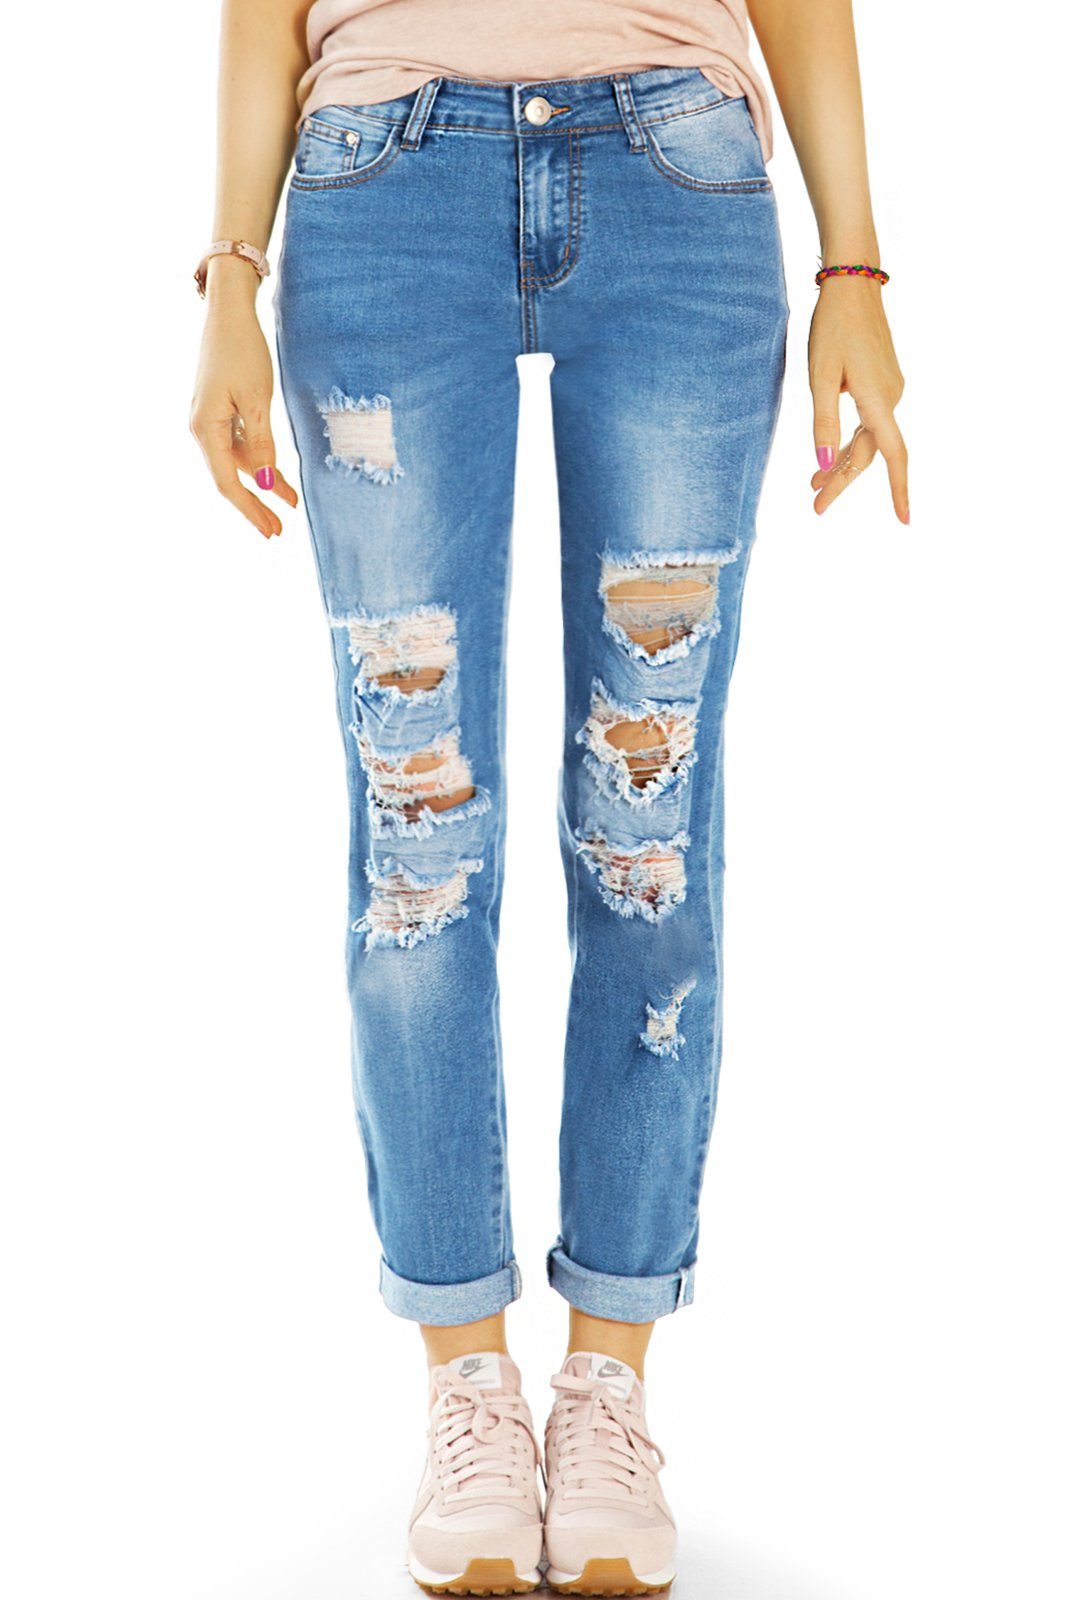 - Hose styled be 5-Pocket-Style mit Slim - fit Destroyed Damen Medium Stretch-Anteil, Slim-fit-Jeans Waist zerrissene Jeans, j17i